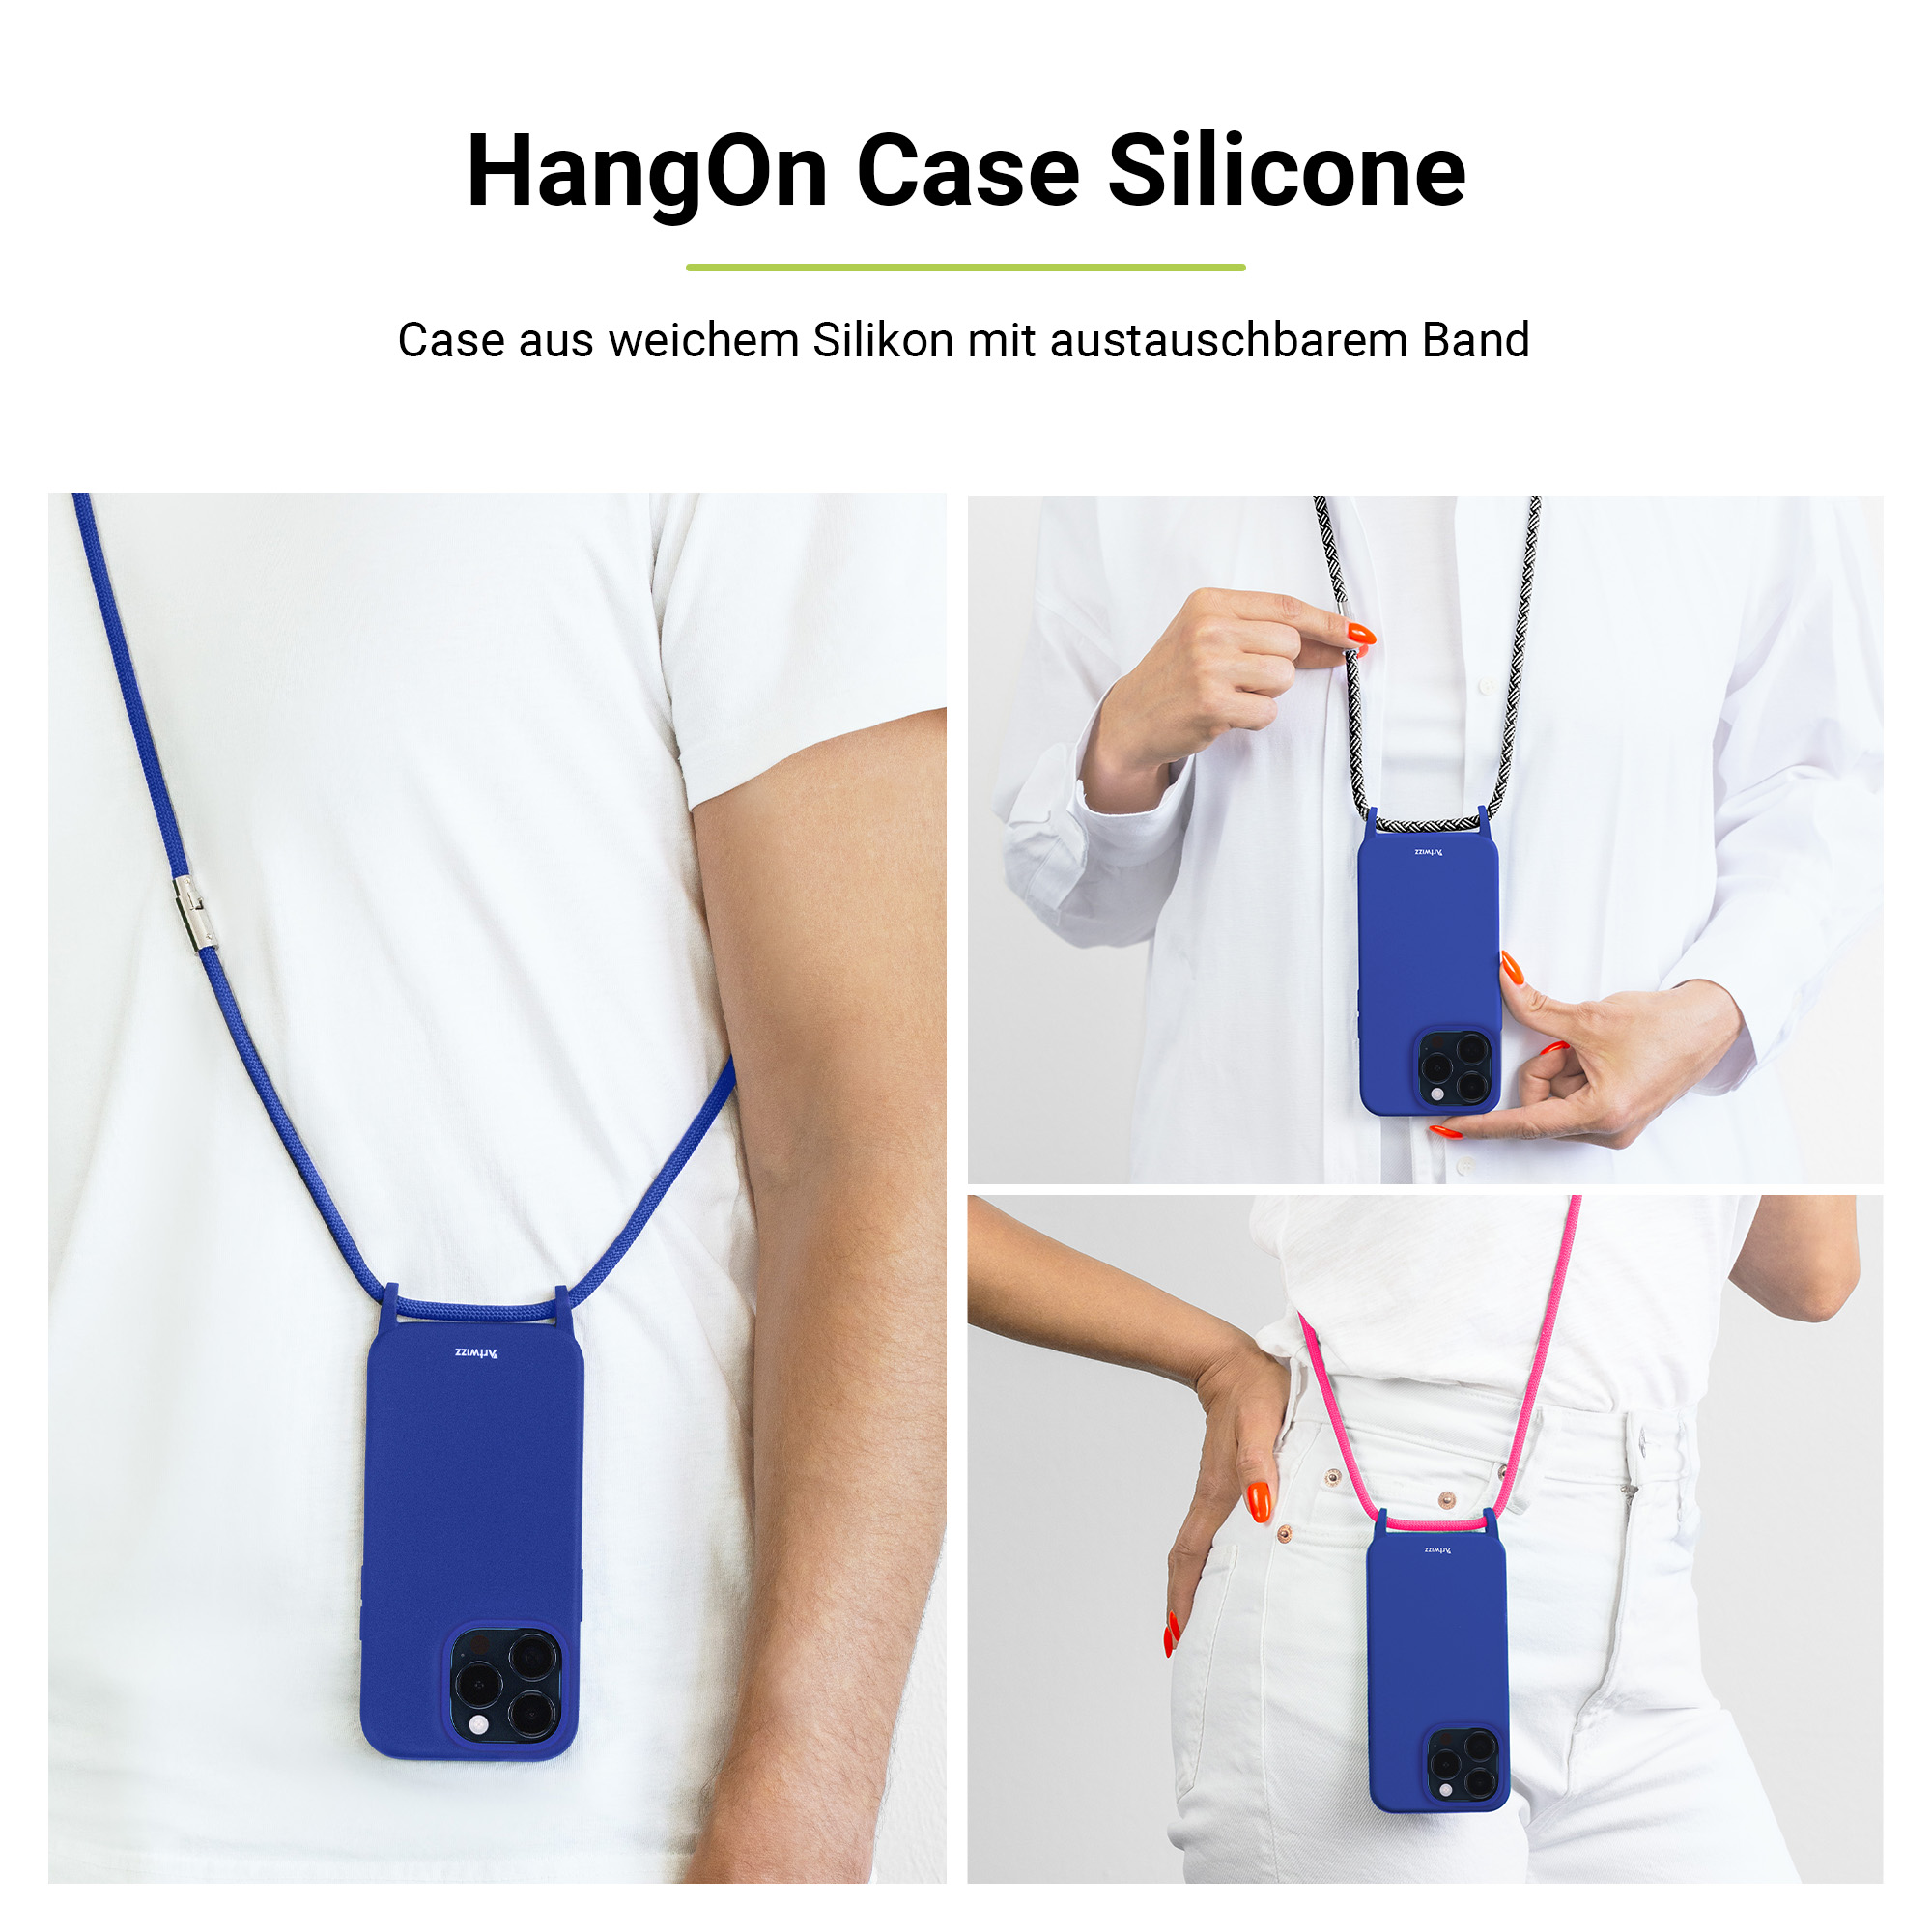 ARTWIZZ HangOn Case Silicone +CHARGE, Apple, iPhone 15 Pro, Blau Umhängetasche